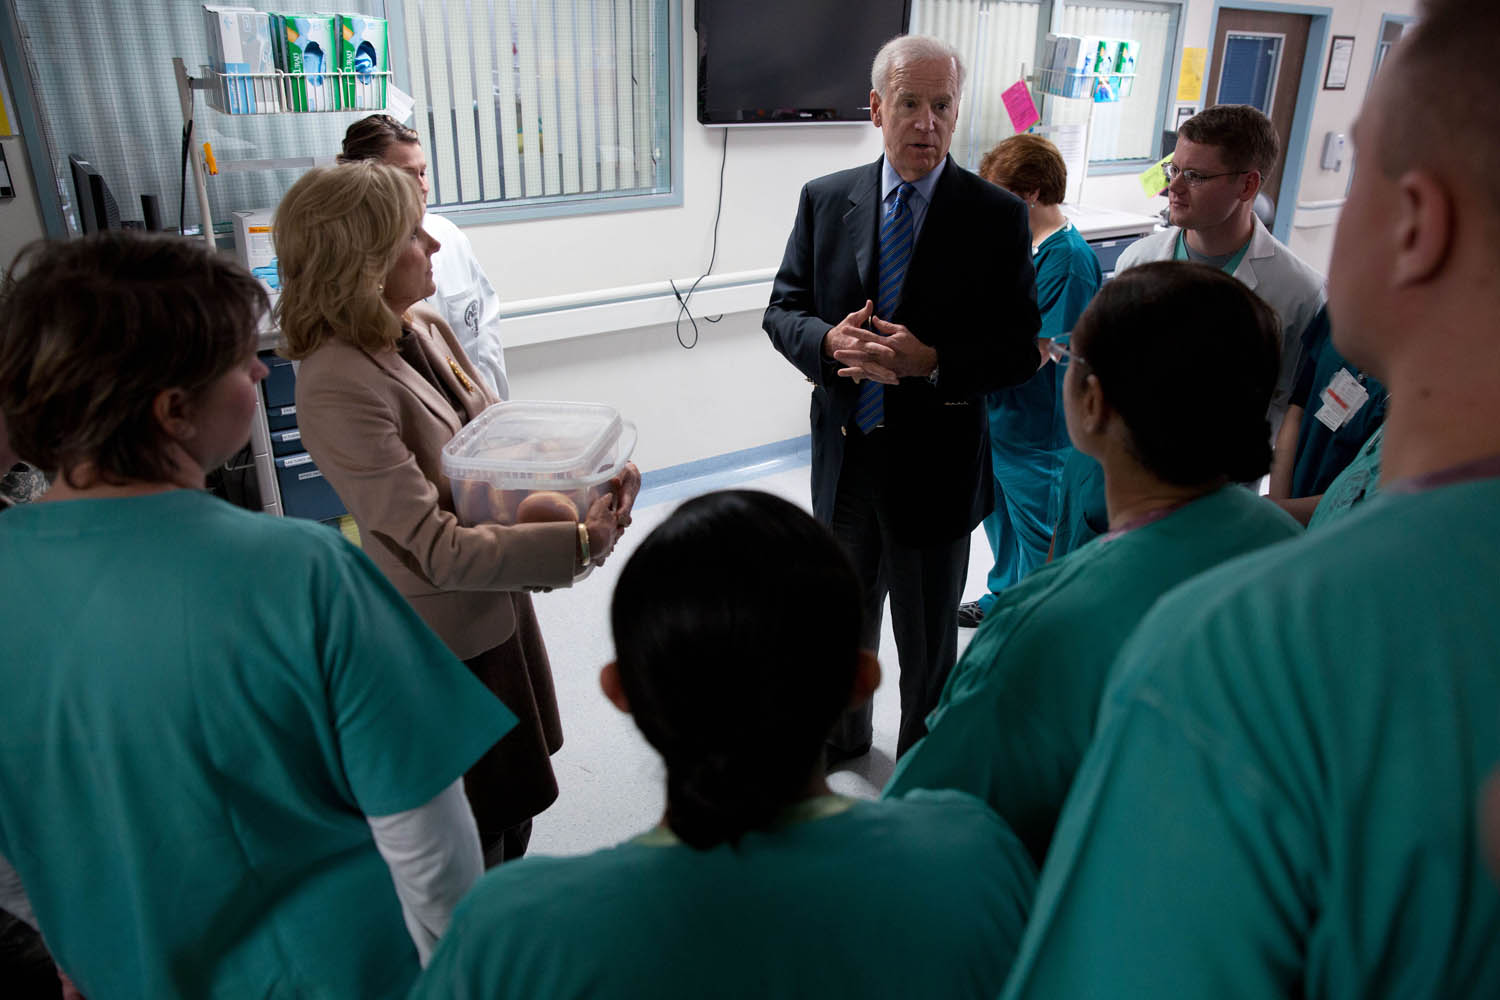 Vice President Joe Biden and Dr. Jill Biden visit with medical staff